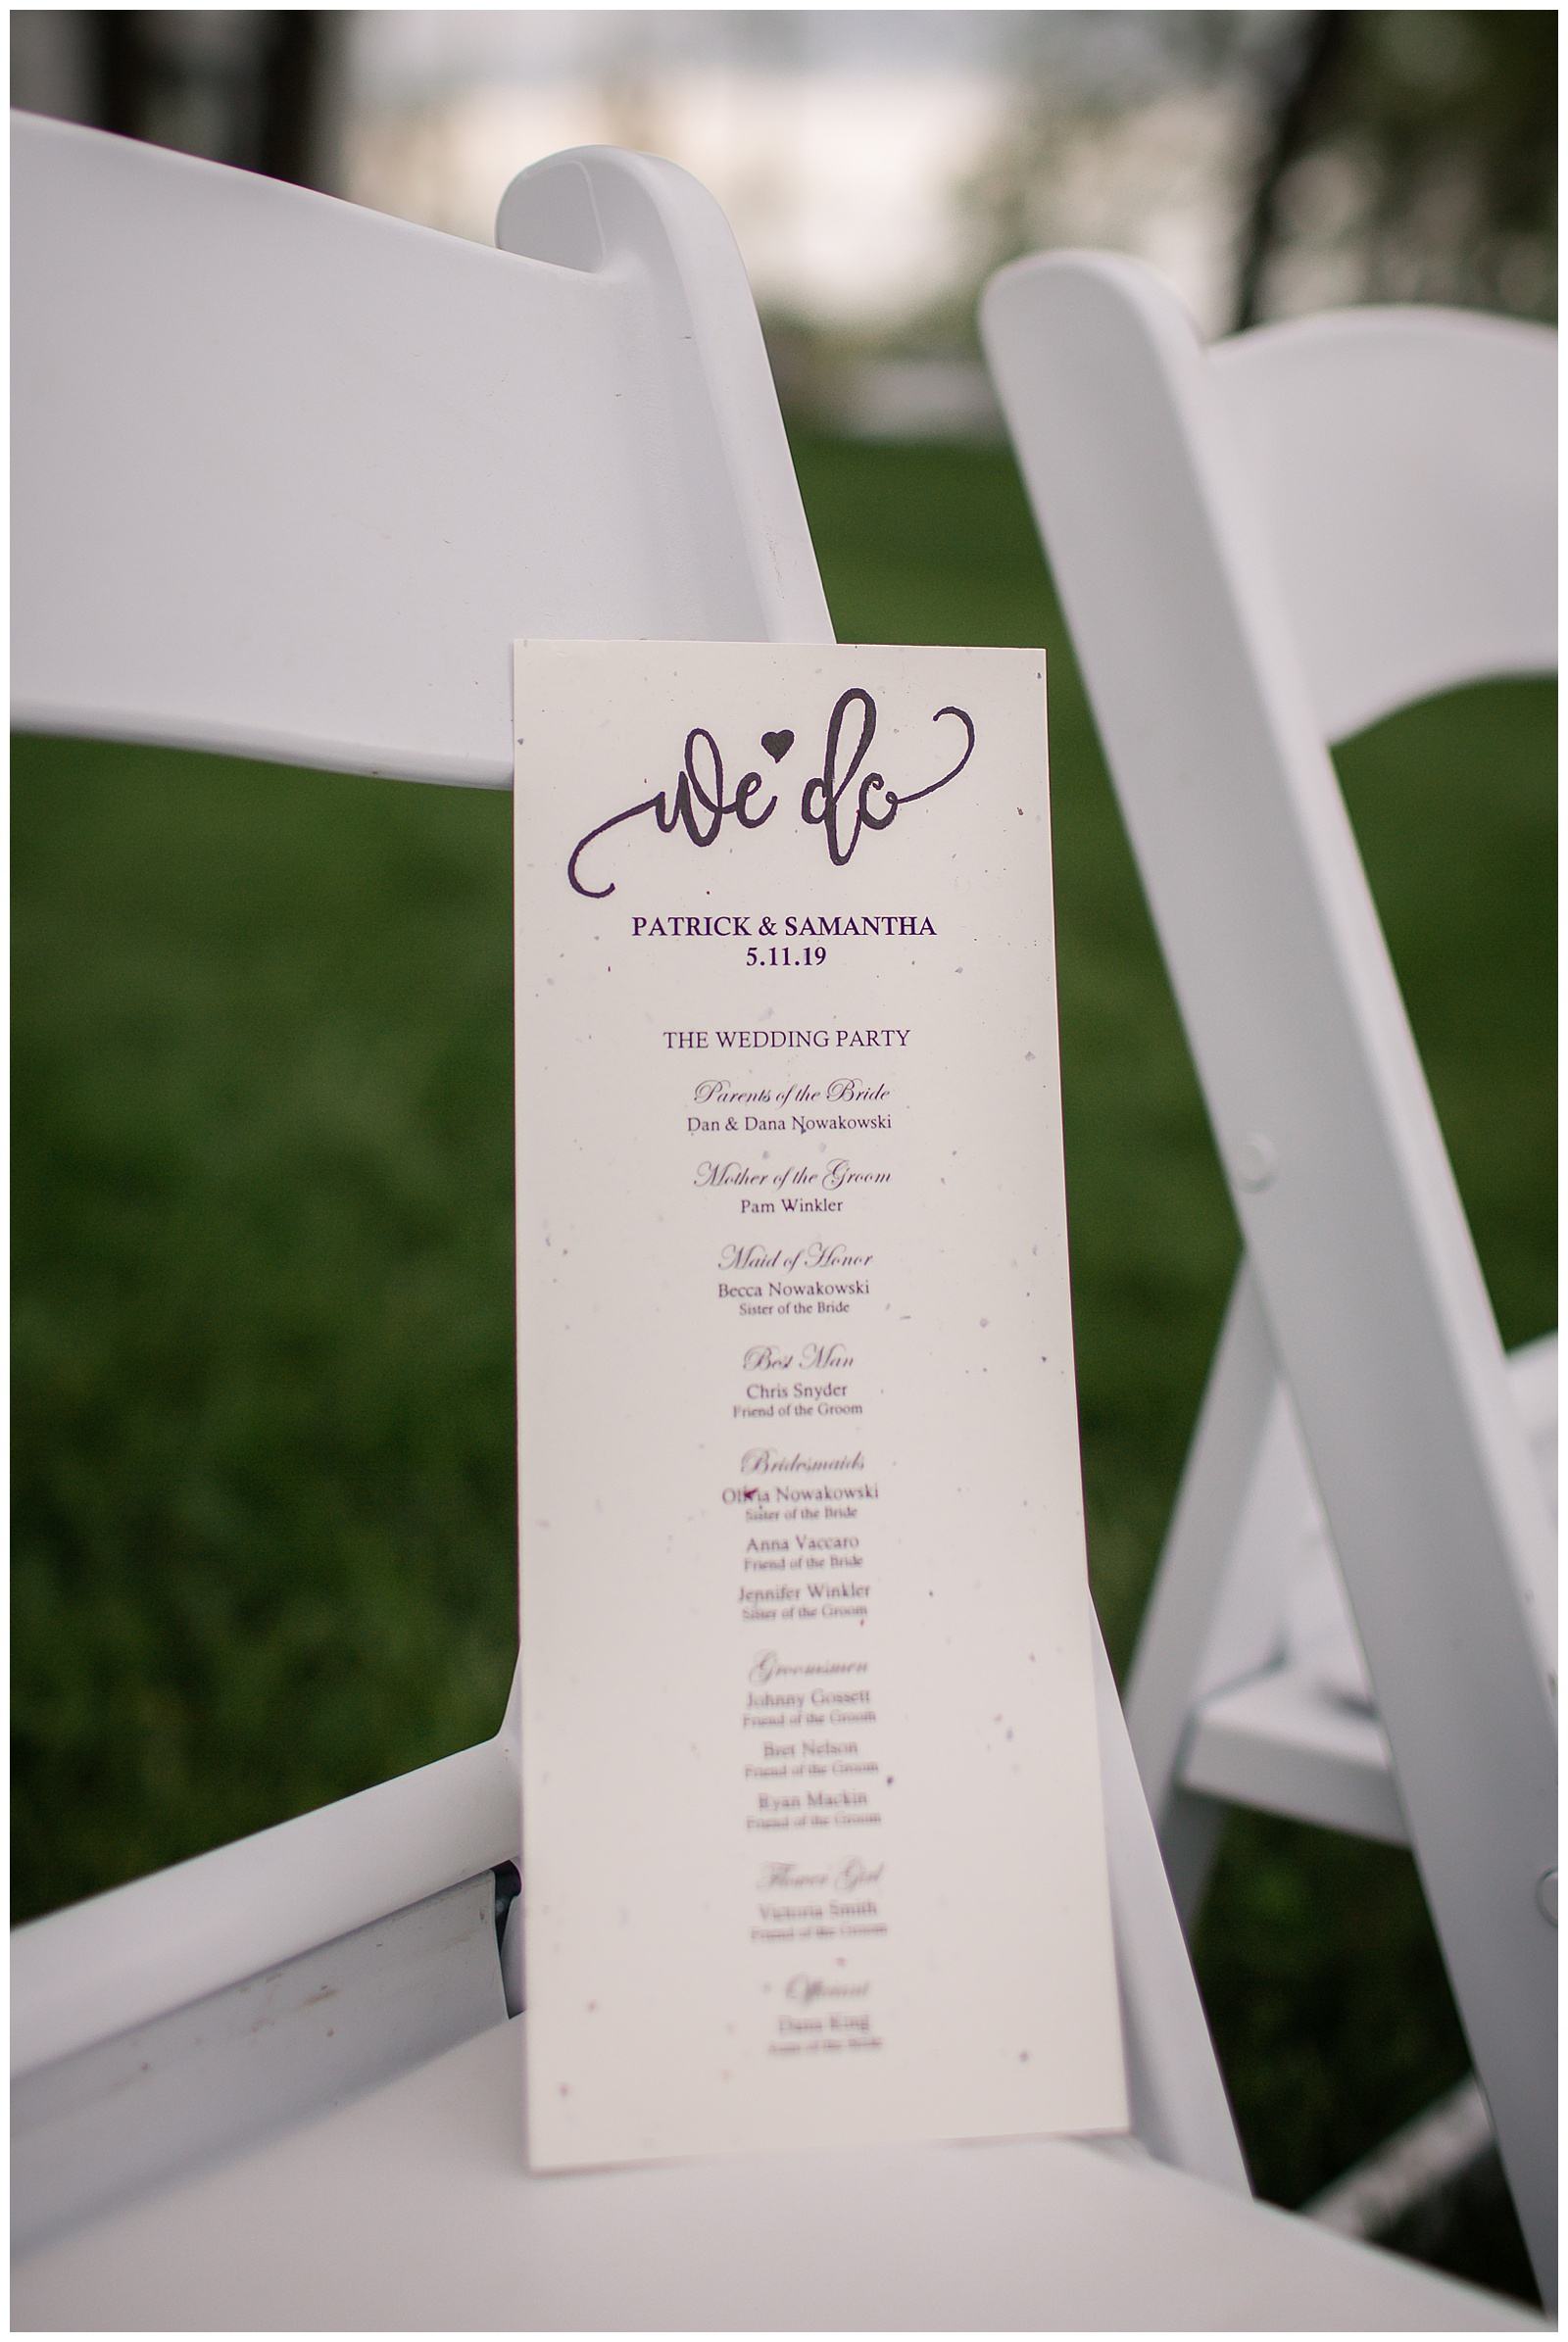 Wedding photography and videography at Executive Hills Polo Club by Kansas City wedding photographers Wisdom-Watson Weddings.